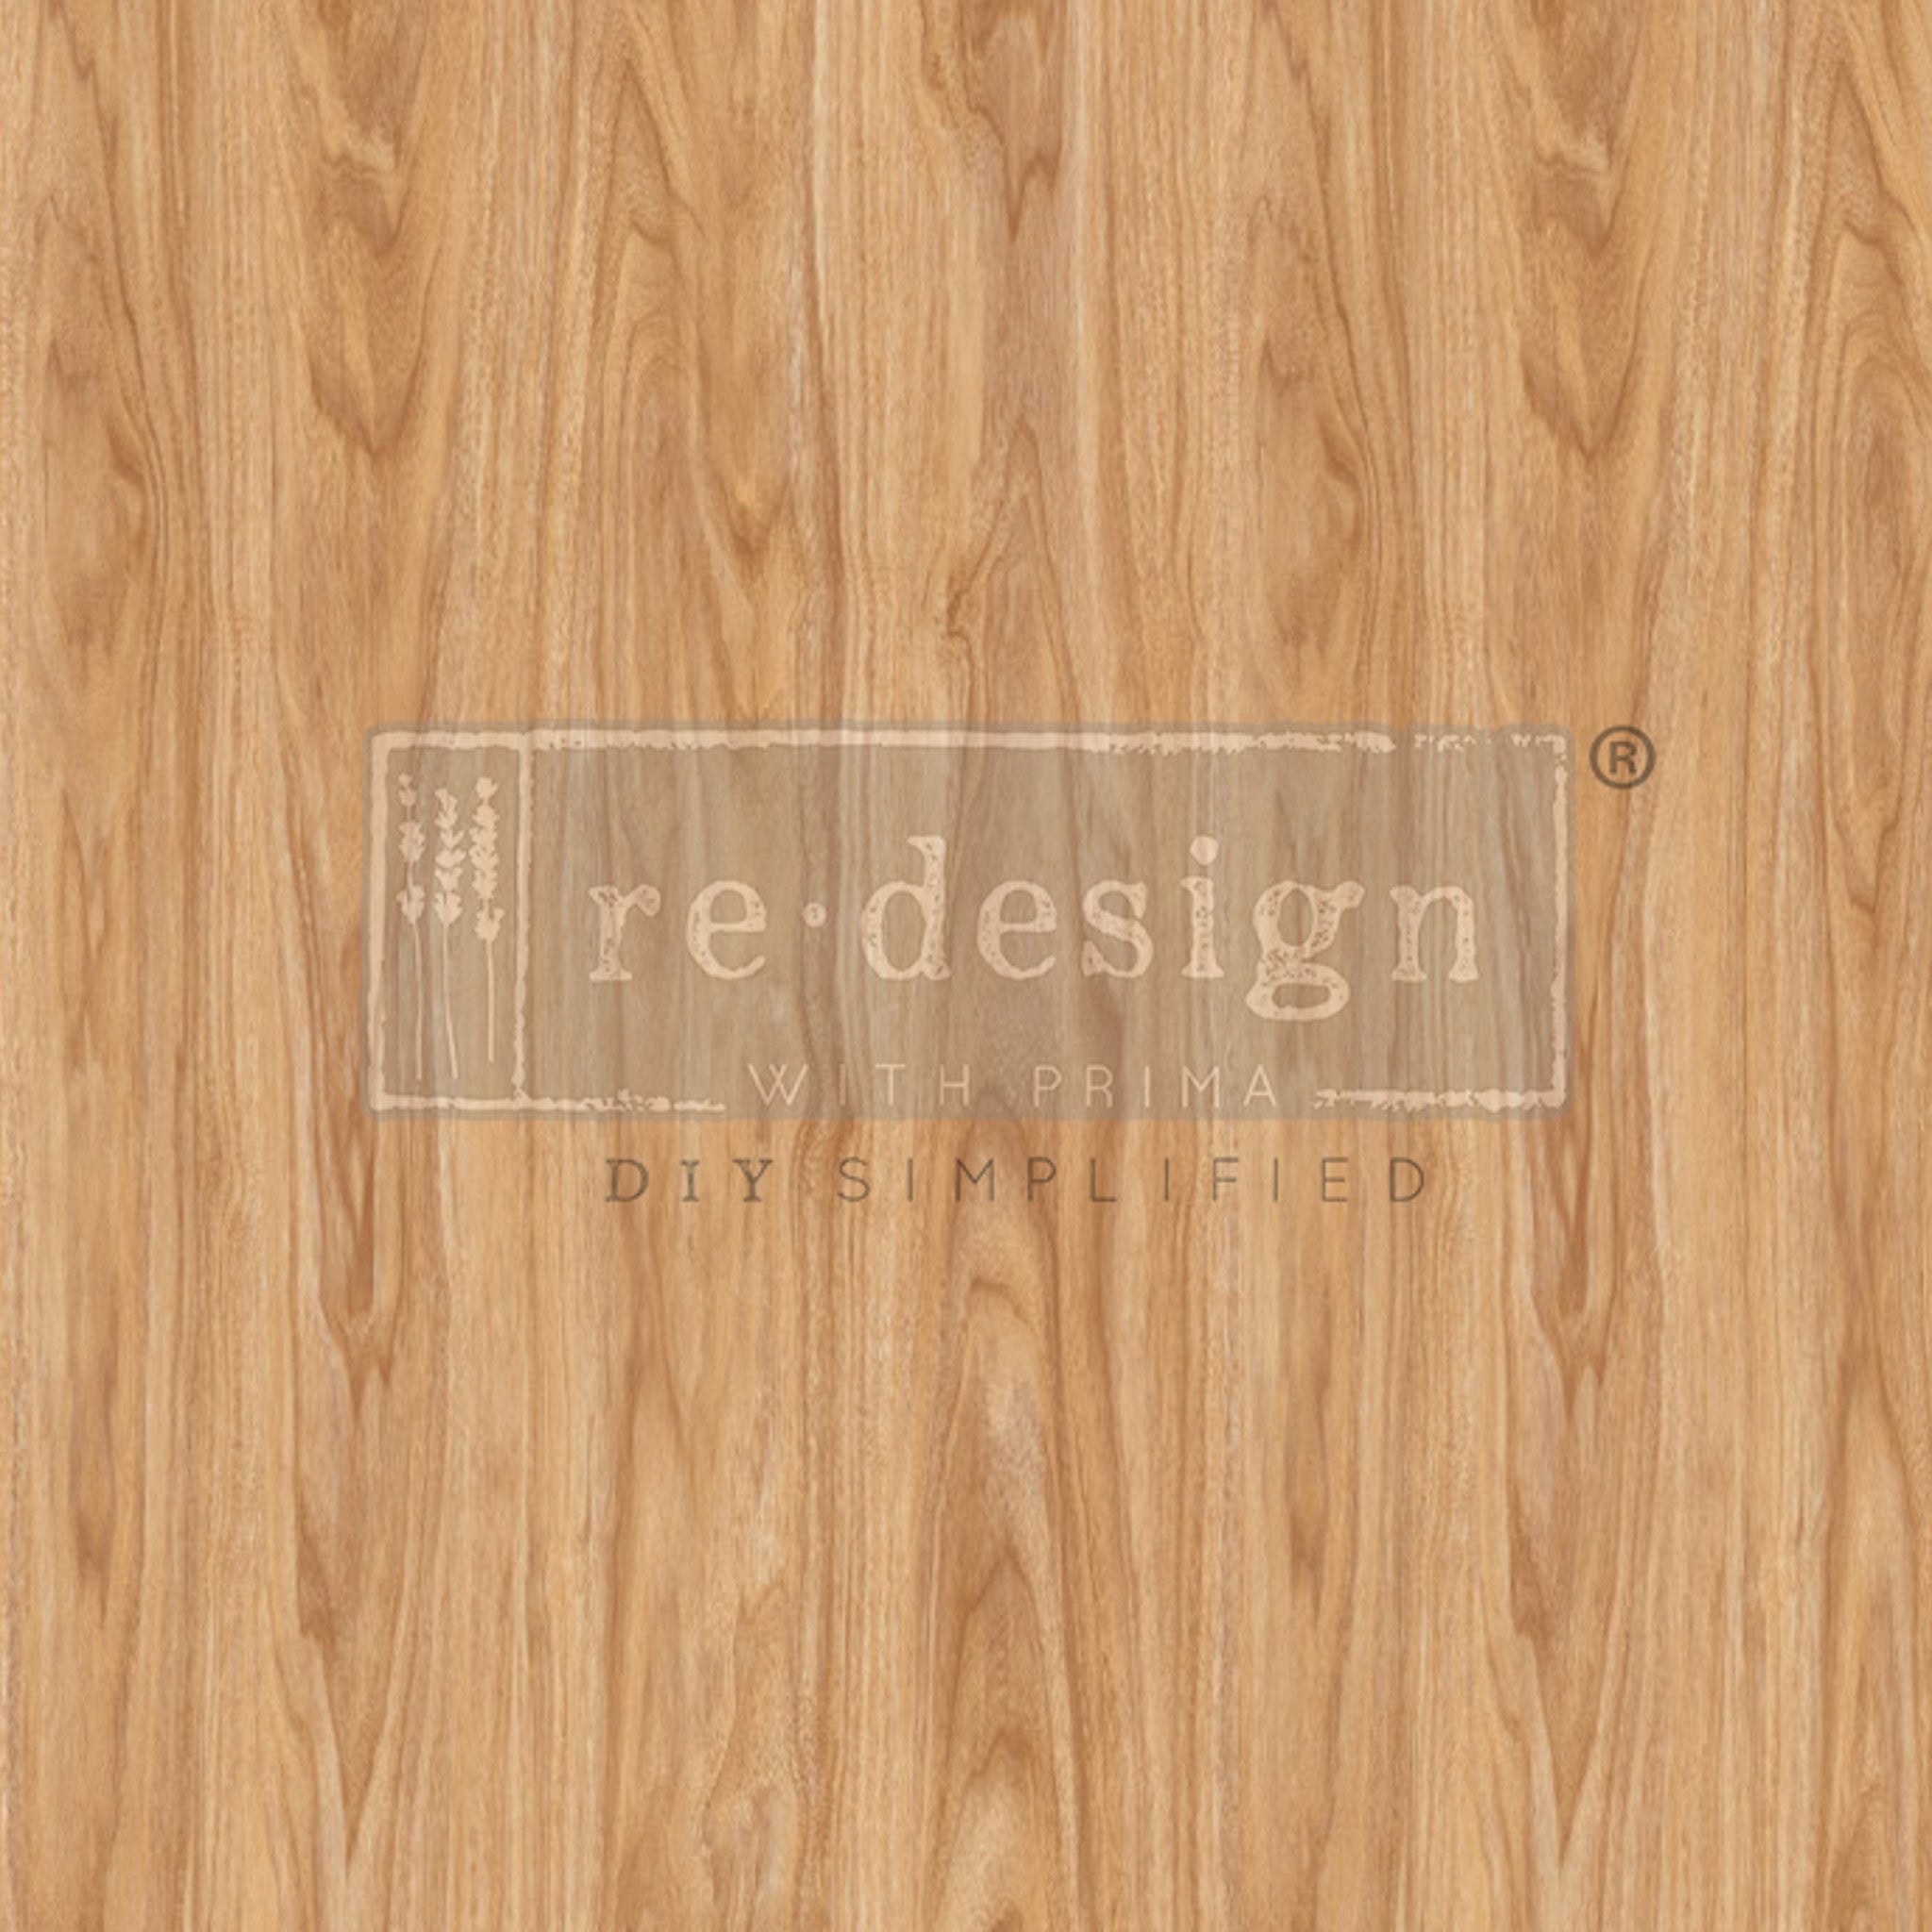 A1 fiber paper design that features the perfect natural wood grain.